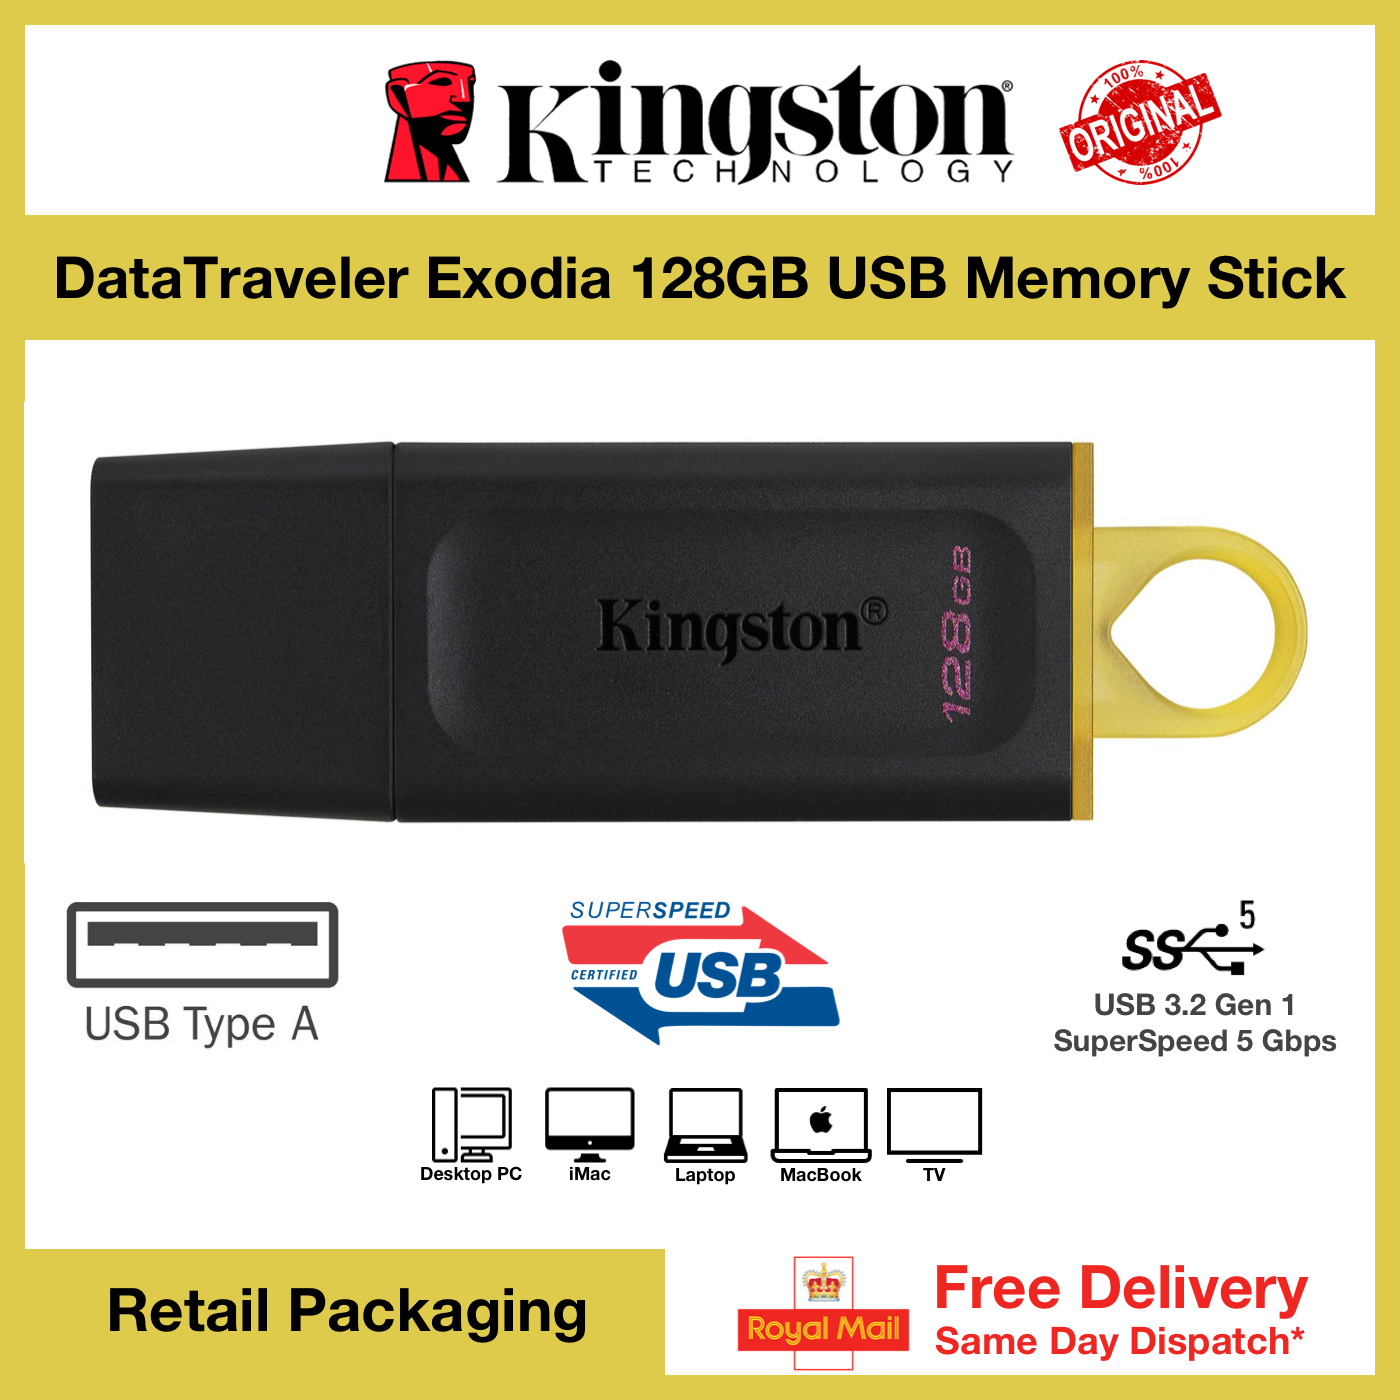 Kingston DataTraveler Exodia 128GB USB Memory Stick USB Drive